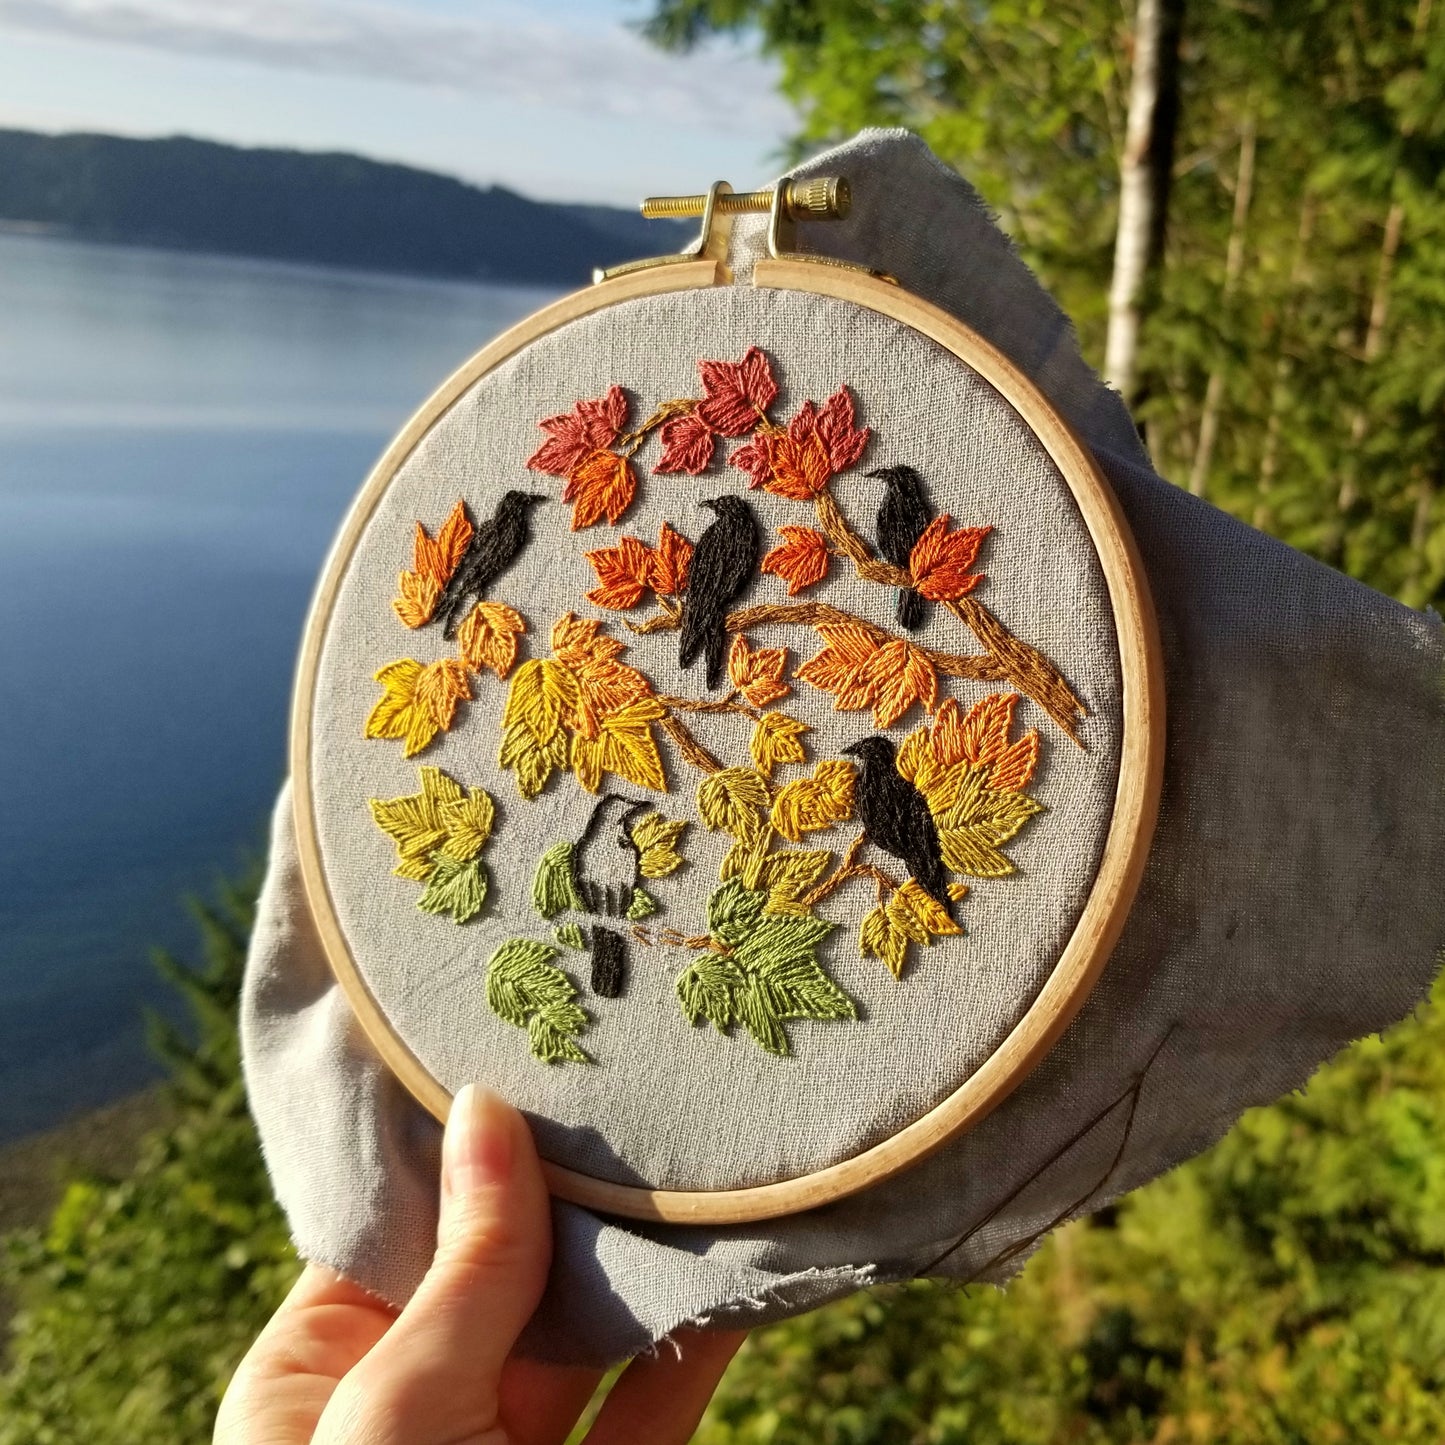 Autumn Birds Embroidery Pattern (PDF)